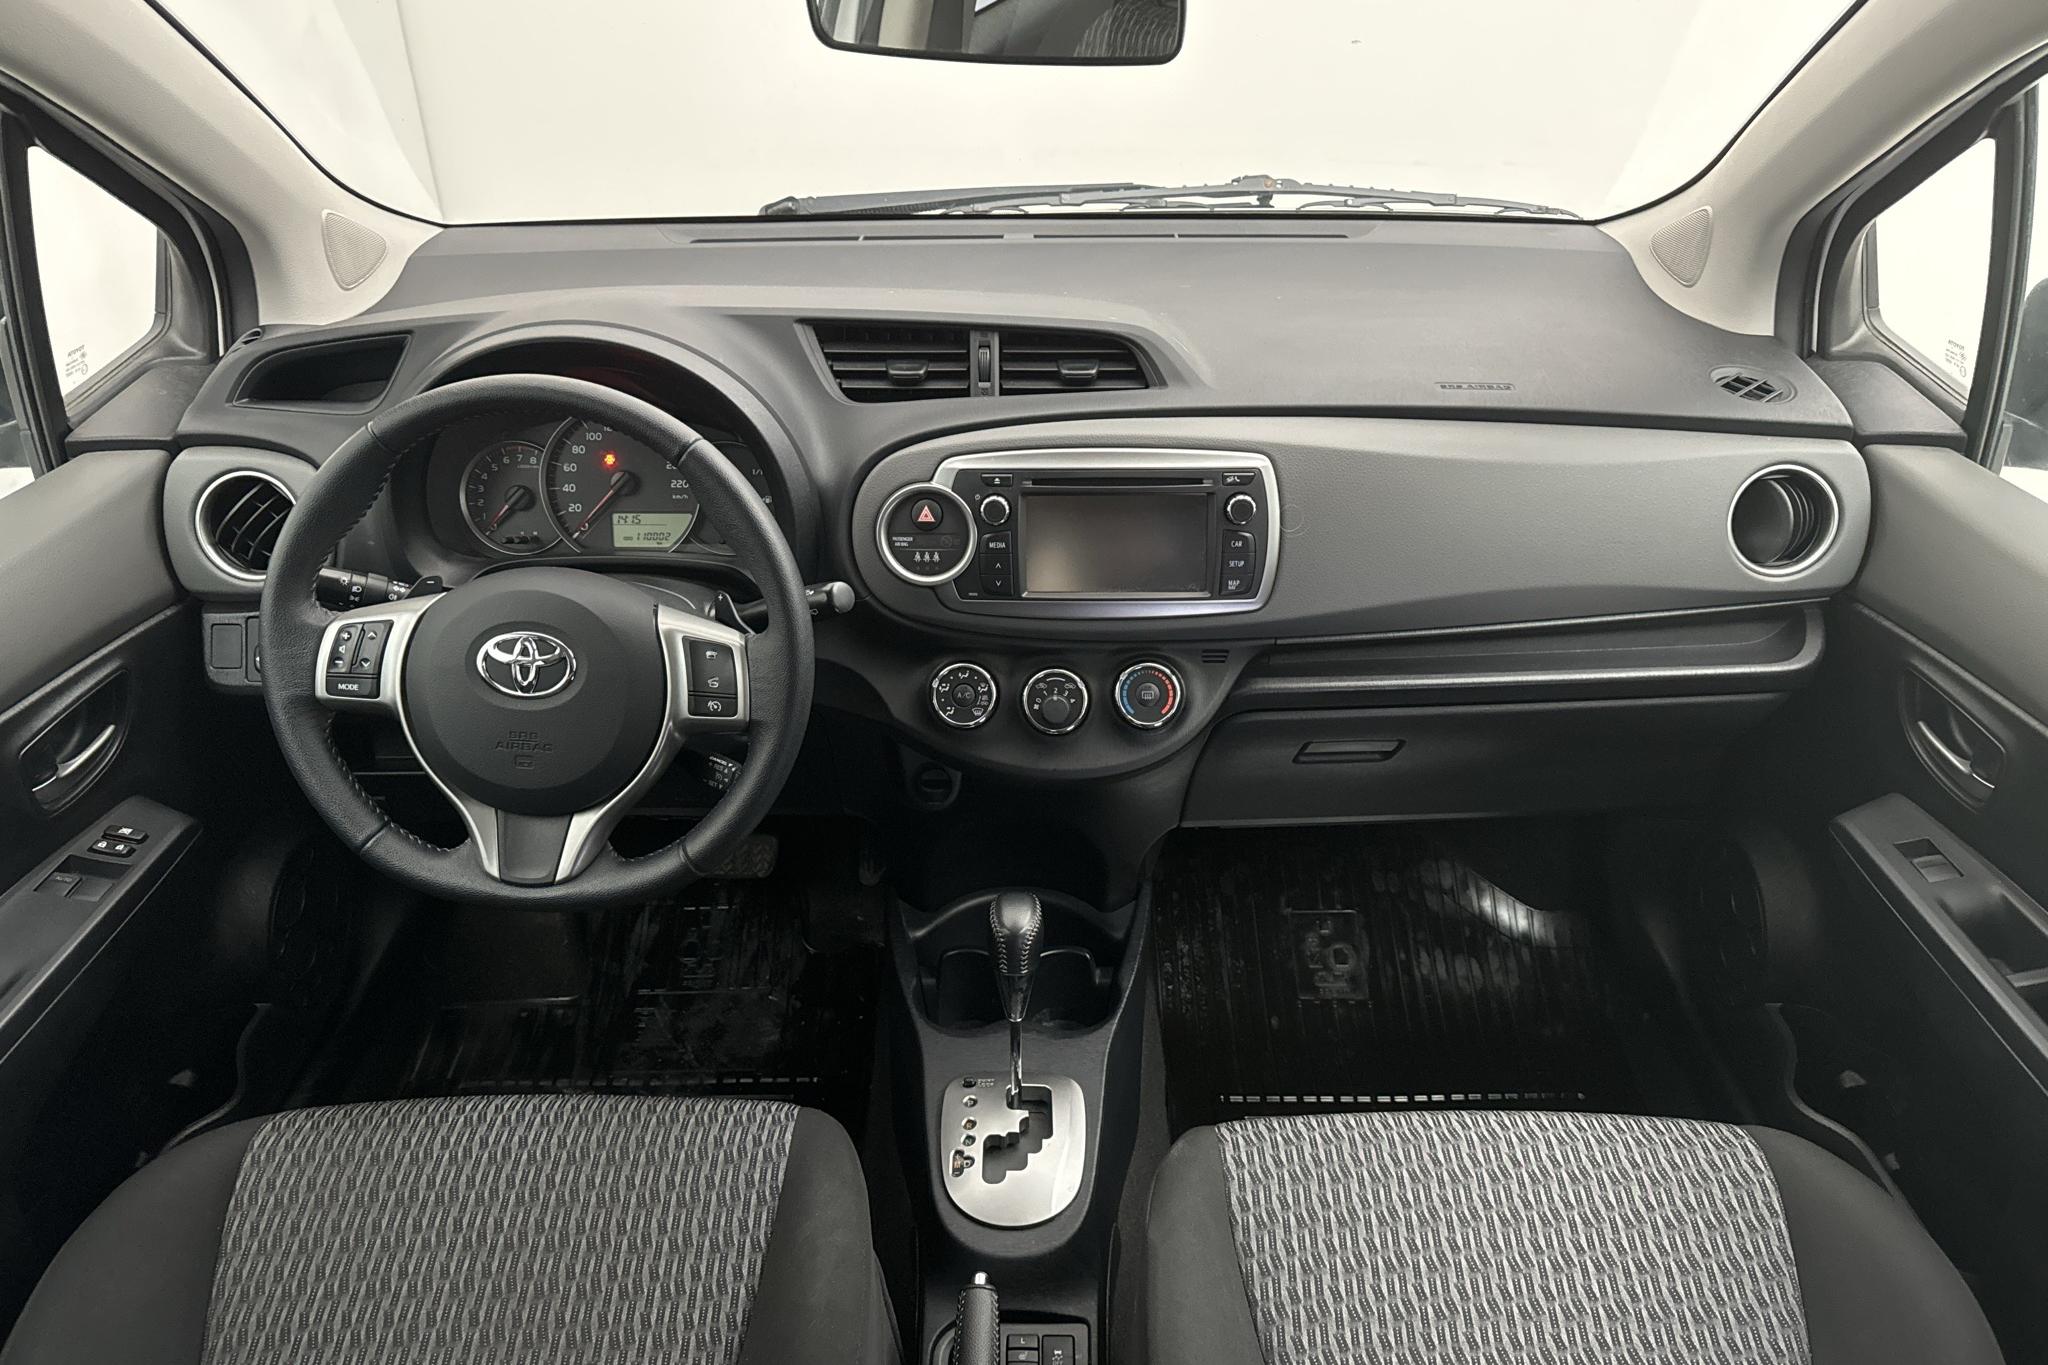 Toyota Yaris 1.33 5dr (100hk) - 110 000 km - Automatic - white - 2014